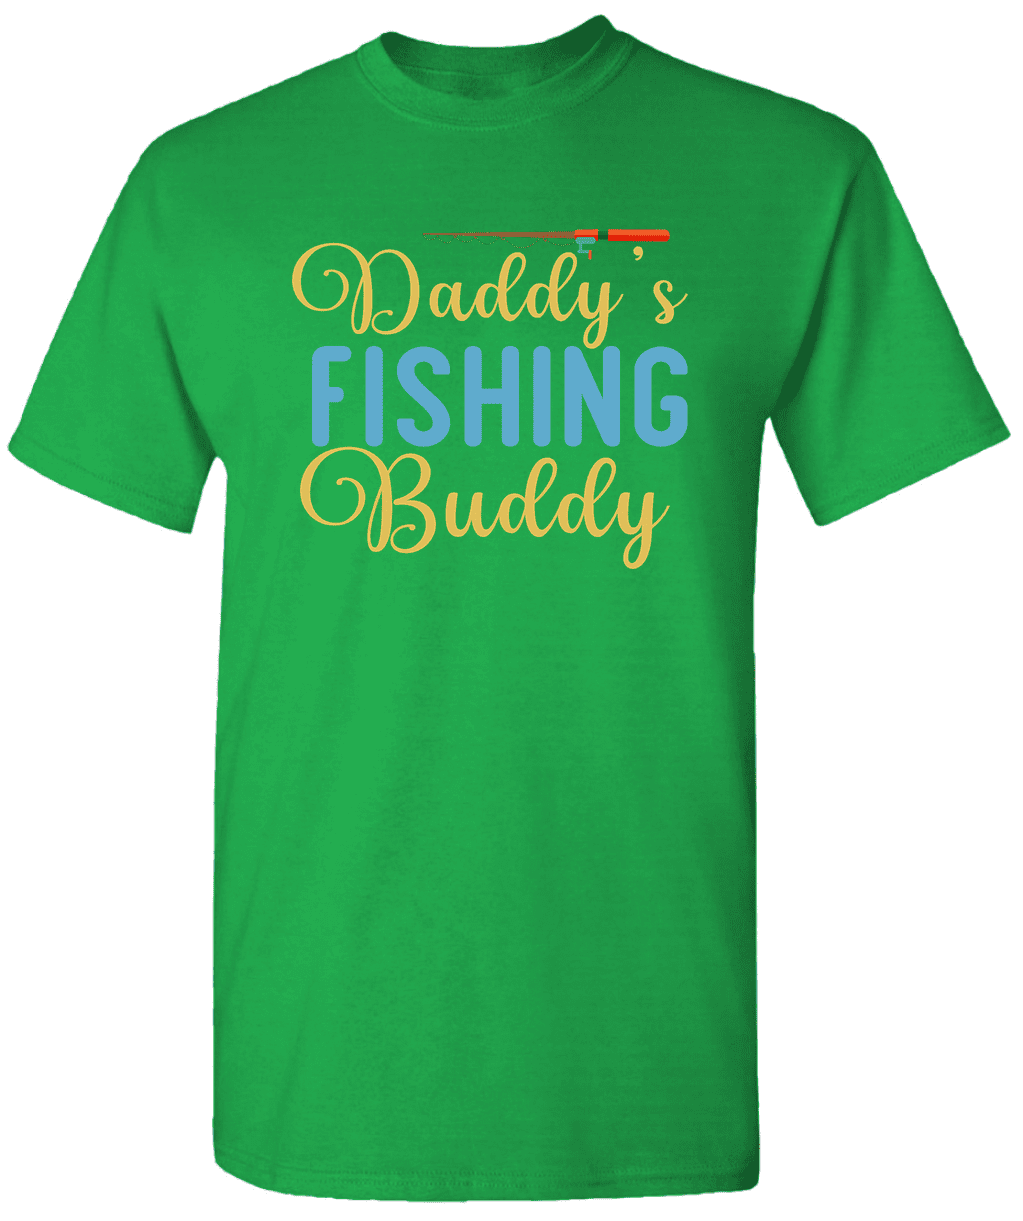 Daddy's Fishing Buddy - Graphic Fishing T-Shirt Novelty Fishing Shirt